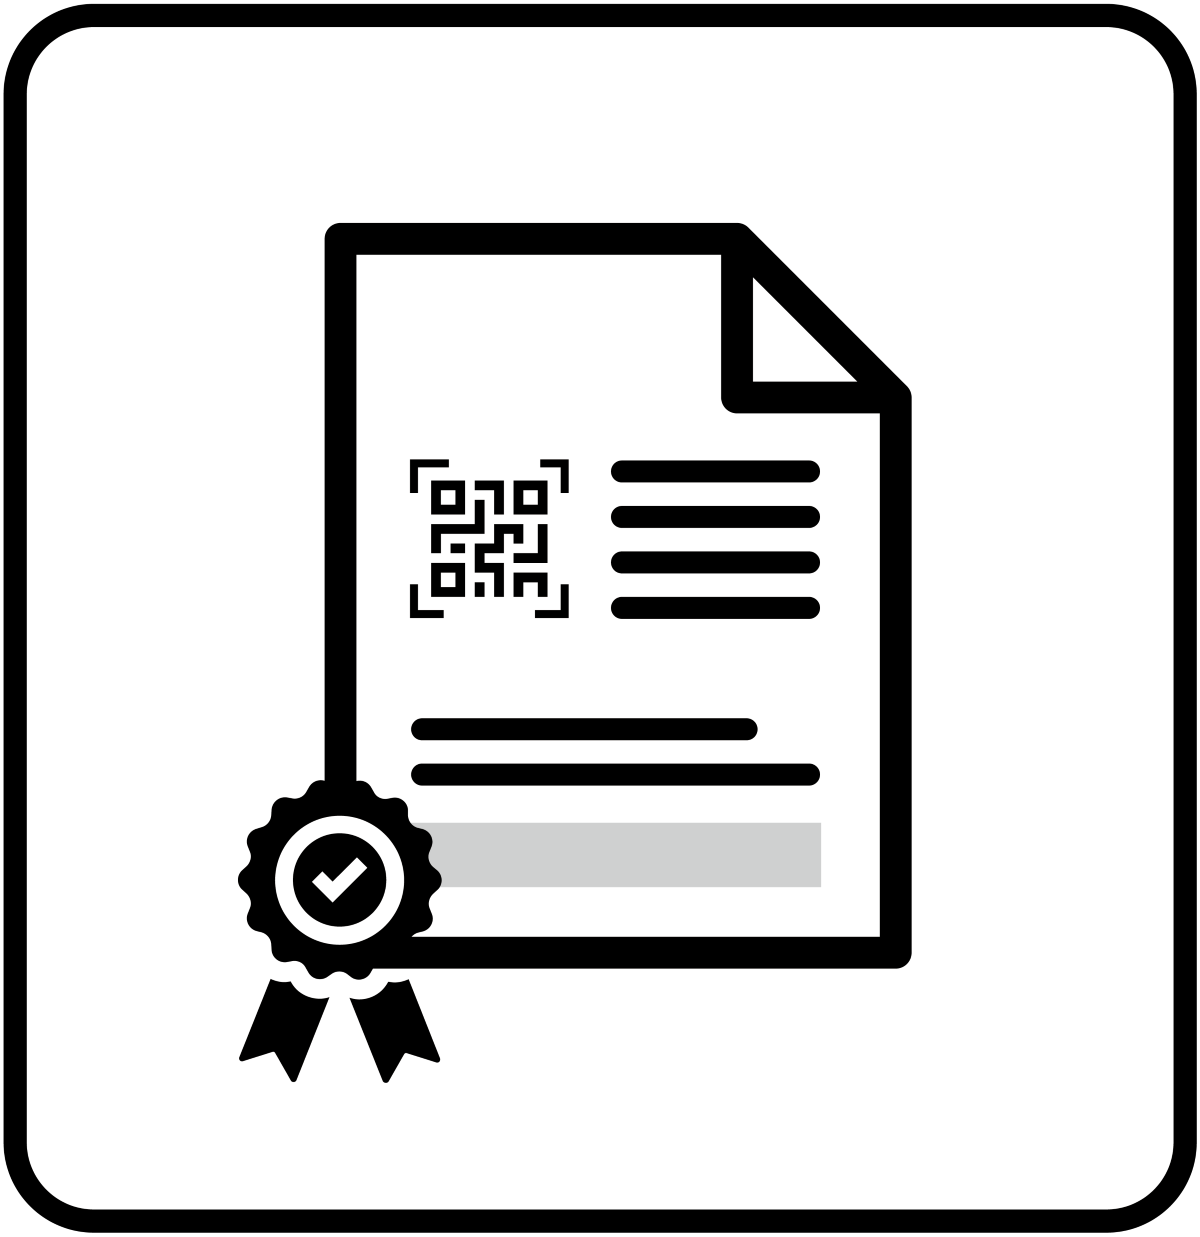 BAG Piktogramm - Covid Zertifikat